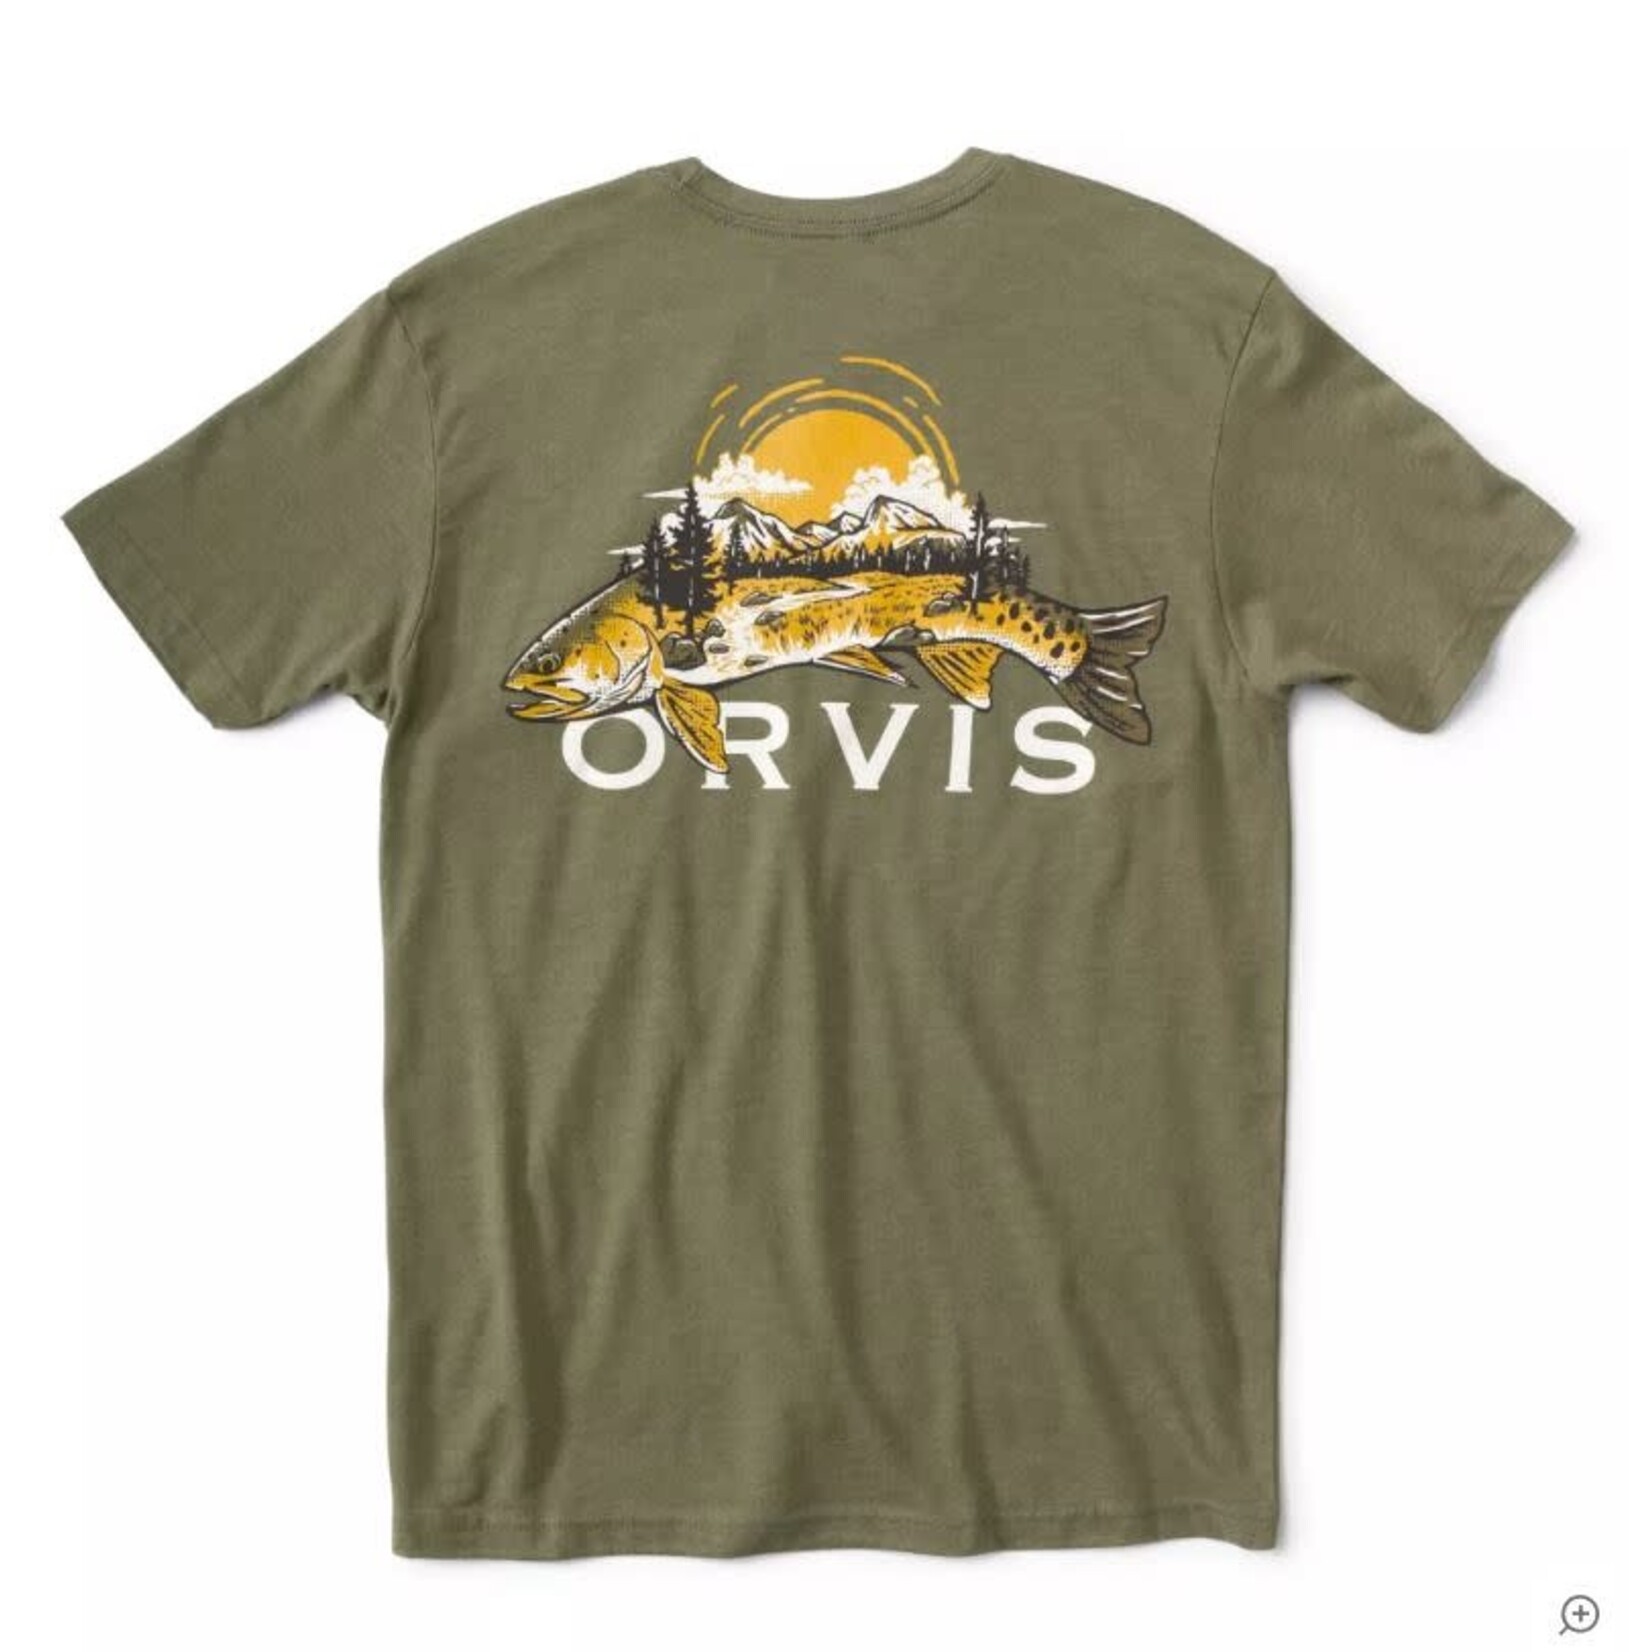 ORVIS Orvis Trout Landscape Tee